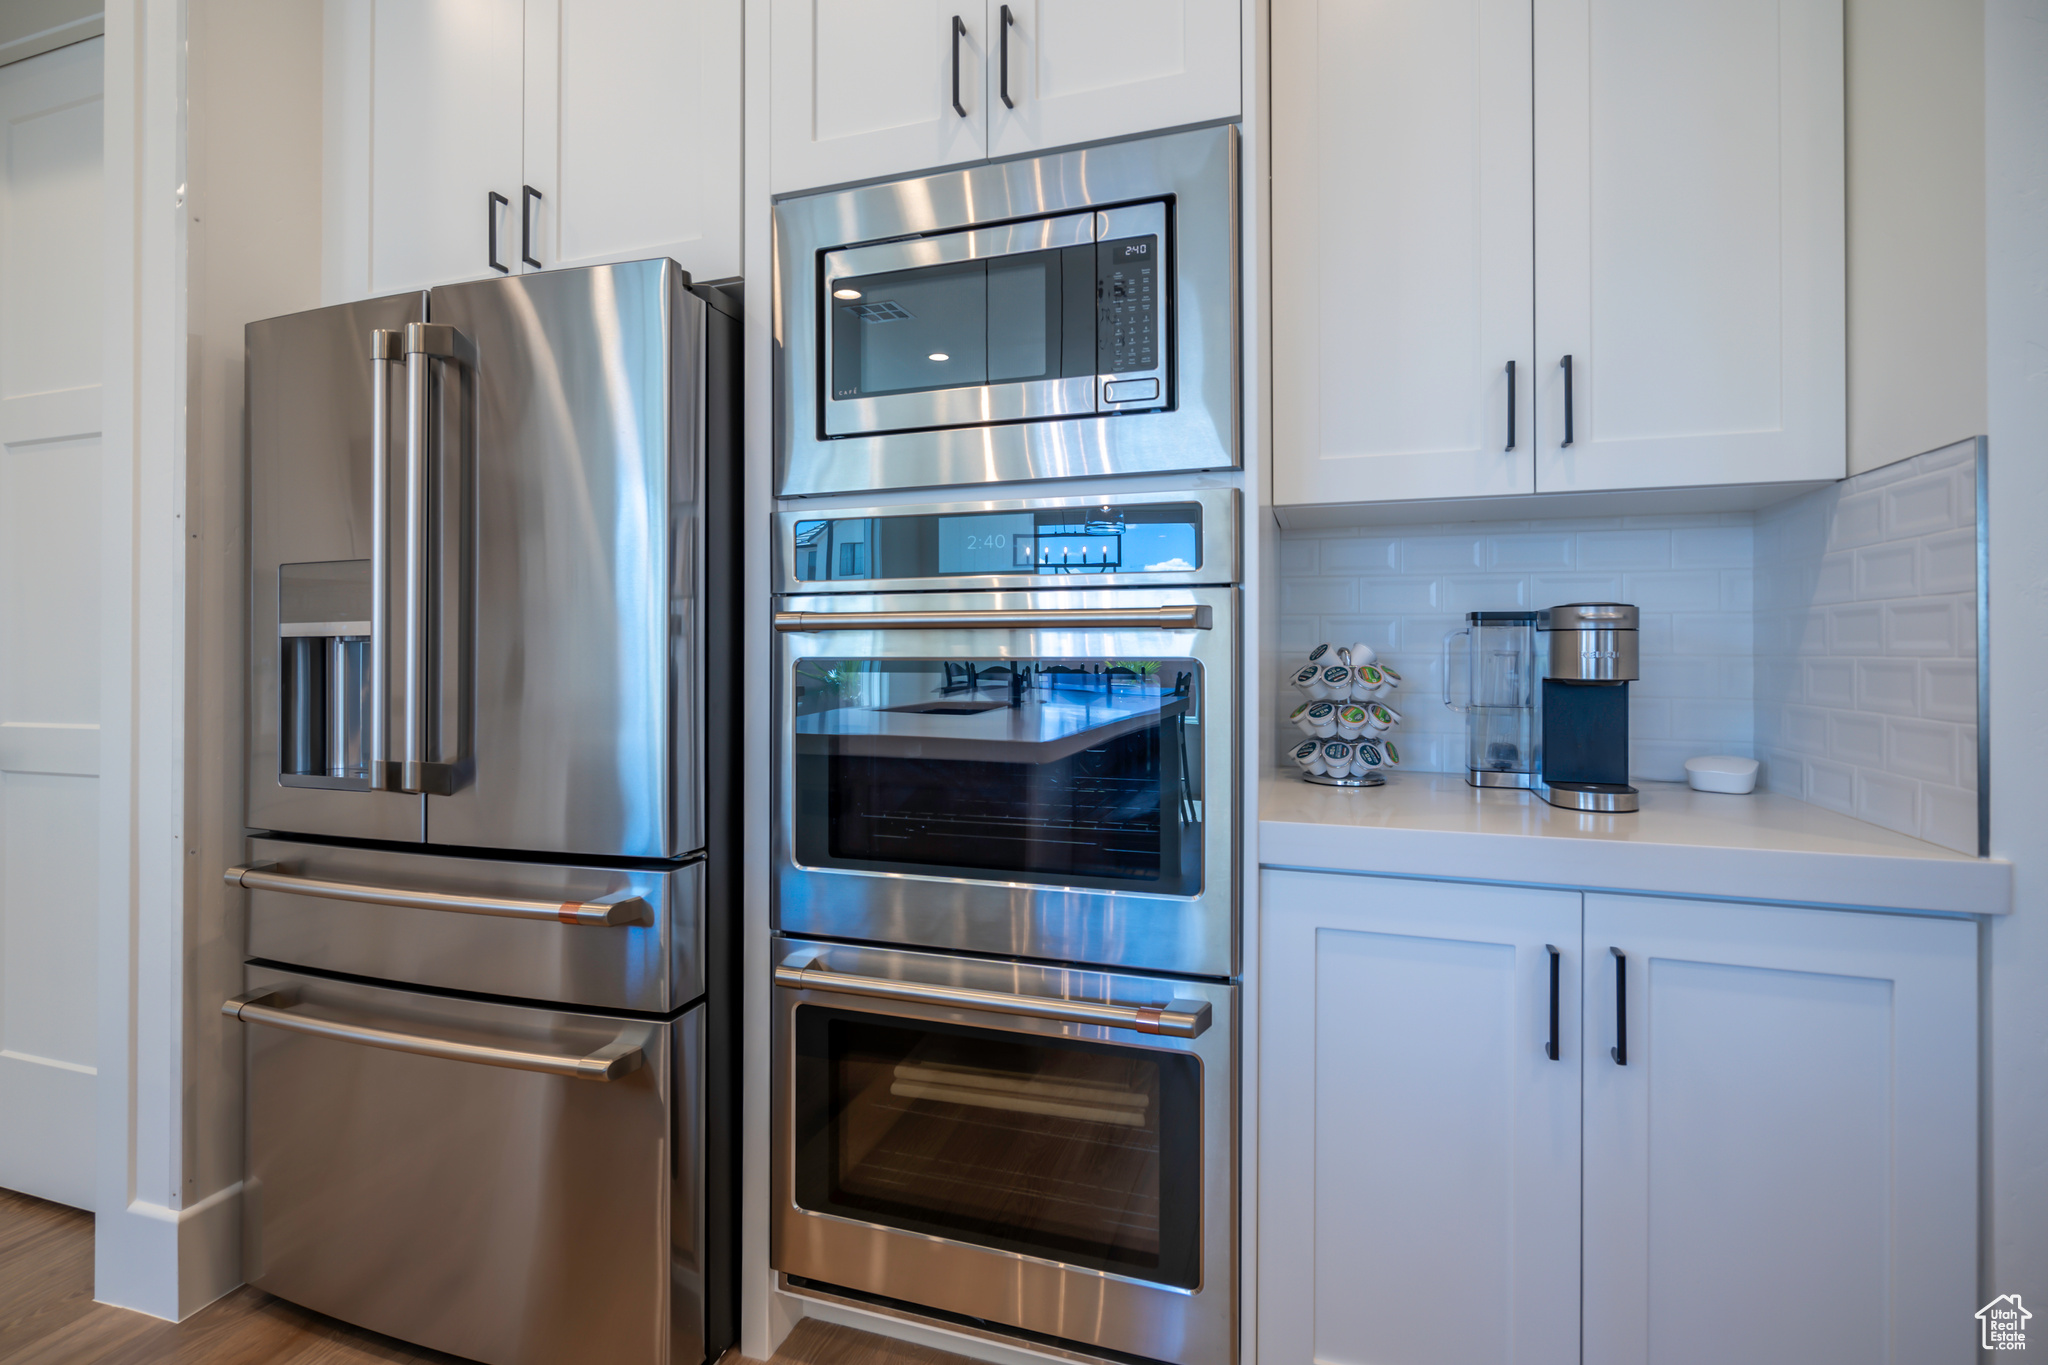 Kitchen featuring white cabinets, light hardwood / wood-style floors, tasteful backsplash, and stainless steel appliances